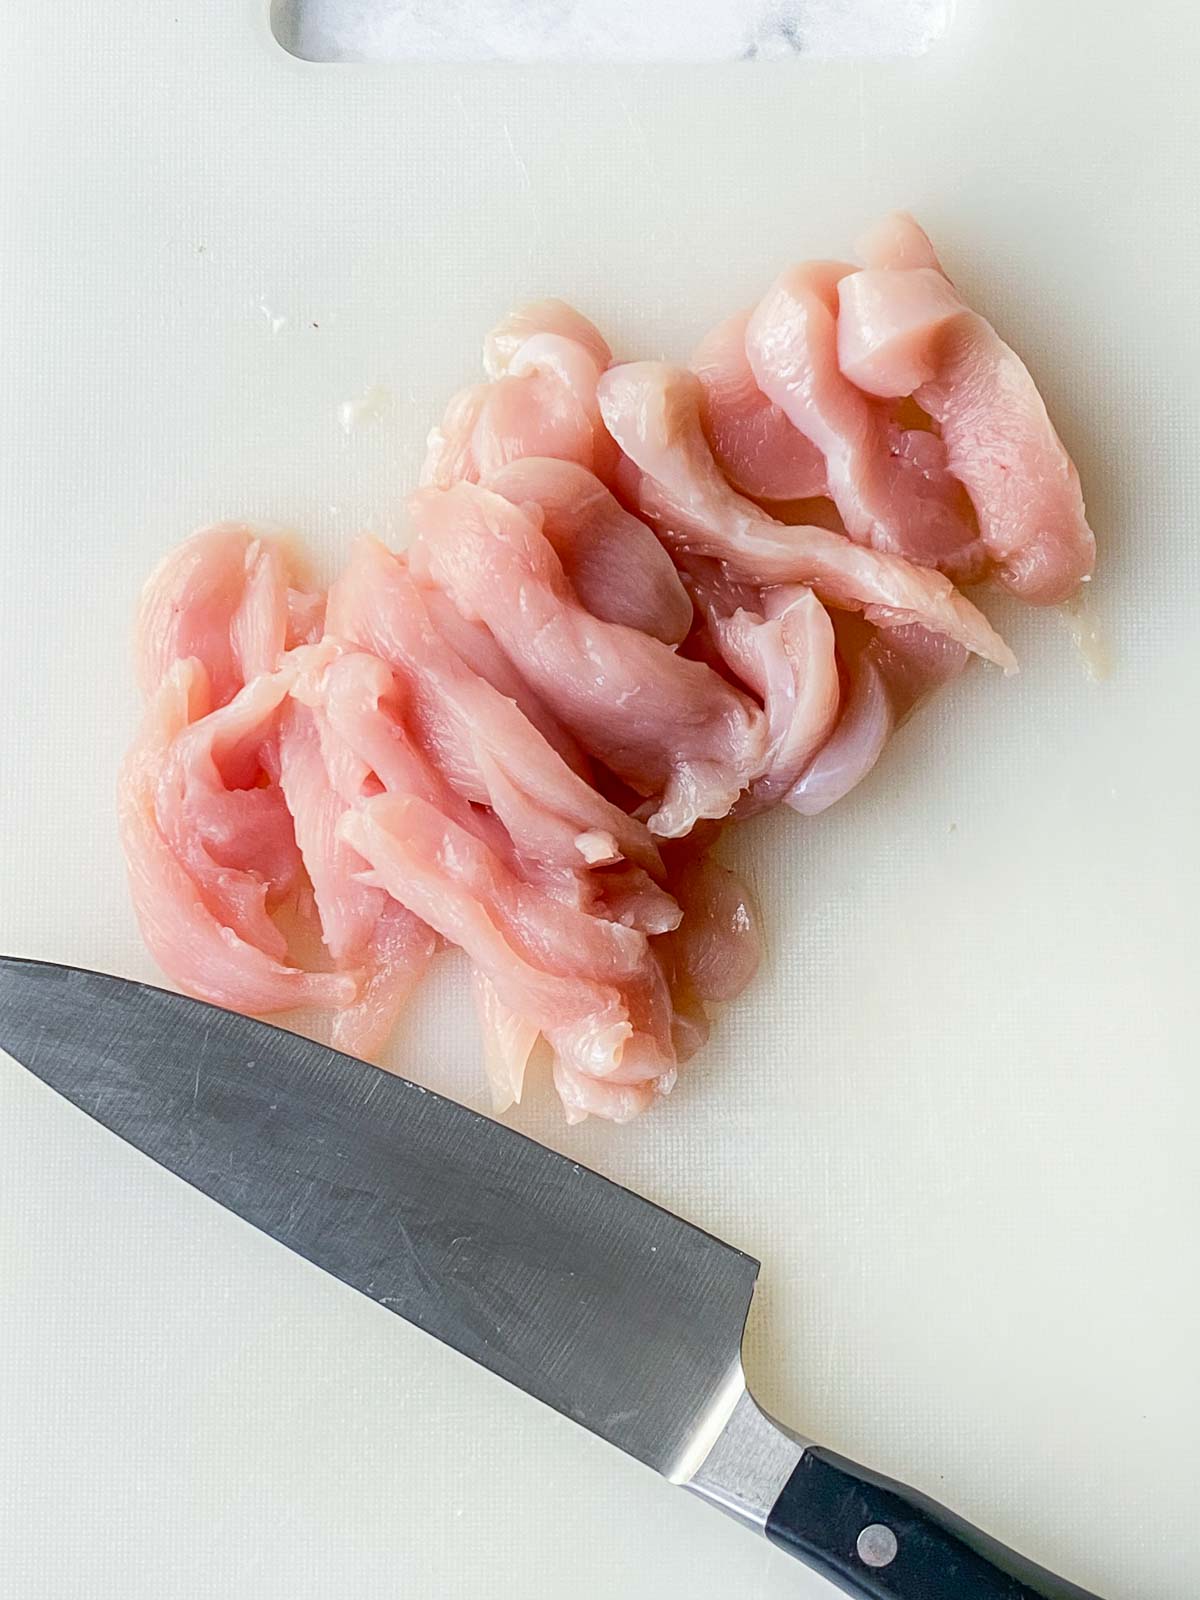 slicing chicken into thin strips. 